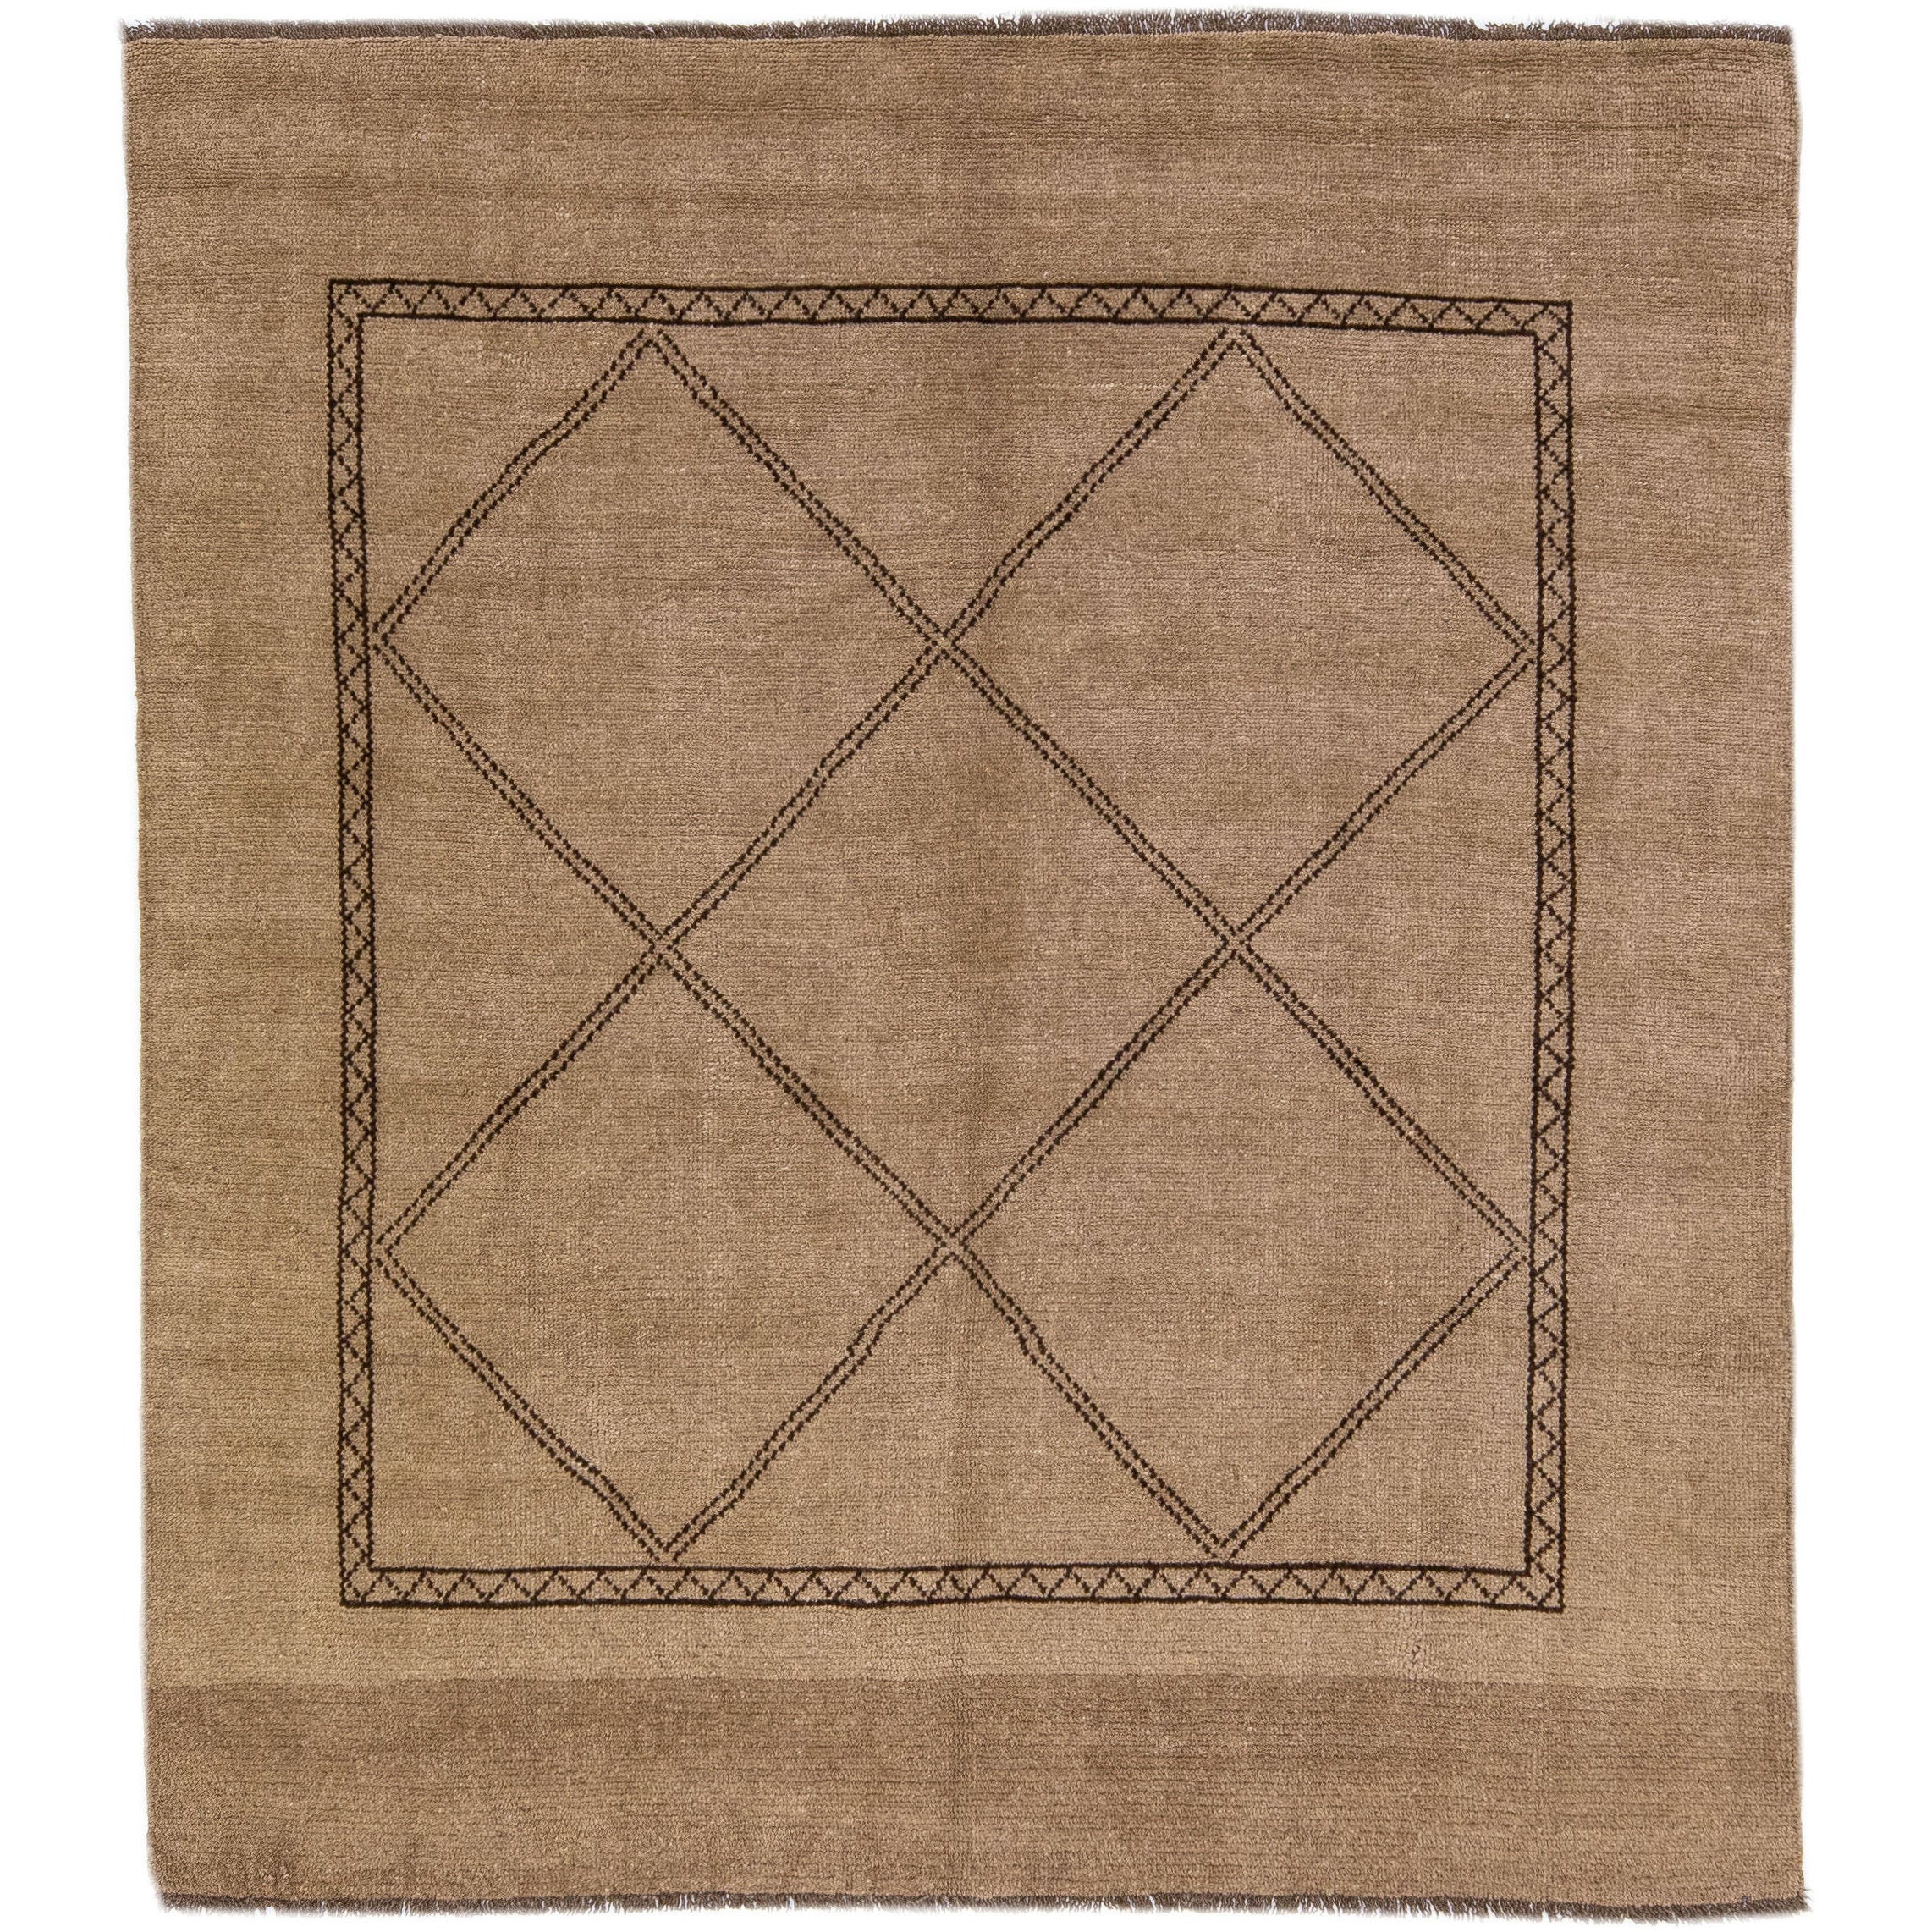 Modern Moroccan Style Brown Handmade Geometric Square Wool Rug by Apadana For Sale